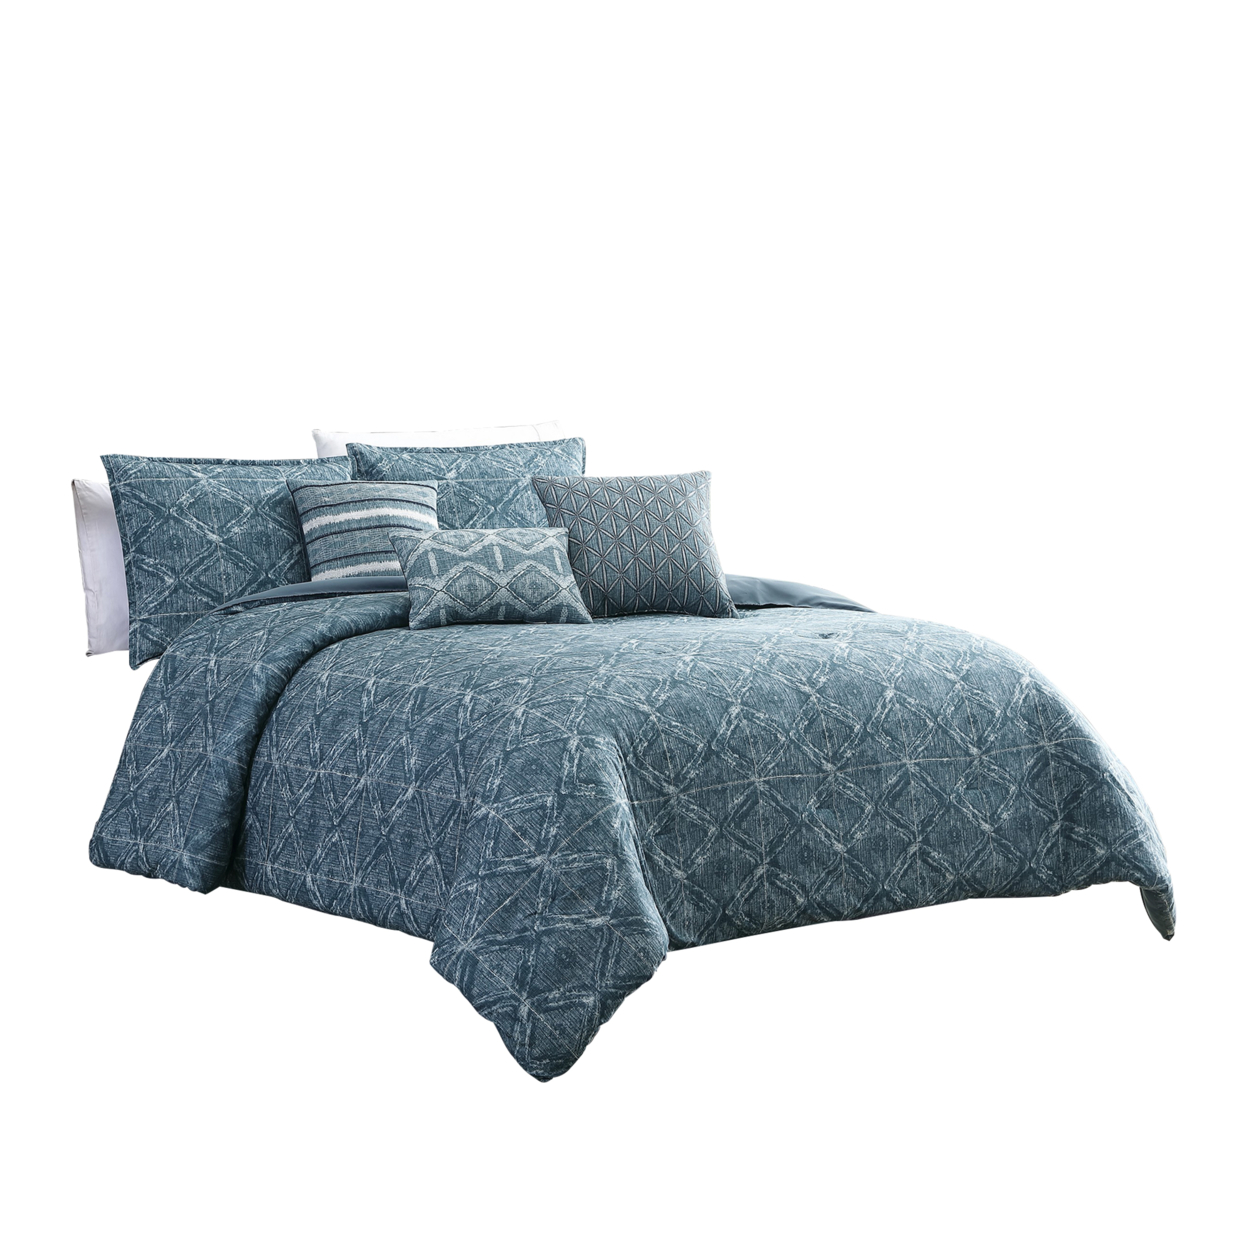 7 Piece Queen Size Cotton Comforter Set With Geometric Print, Blue- Saltoro Sherpi